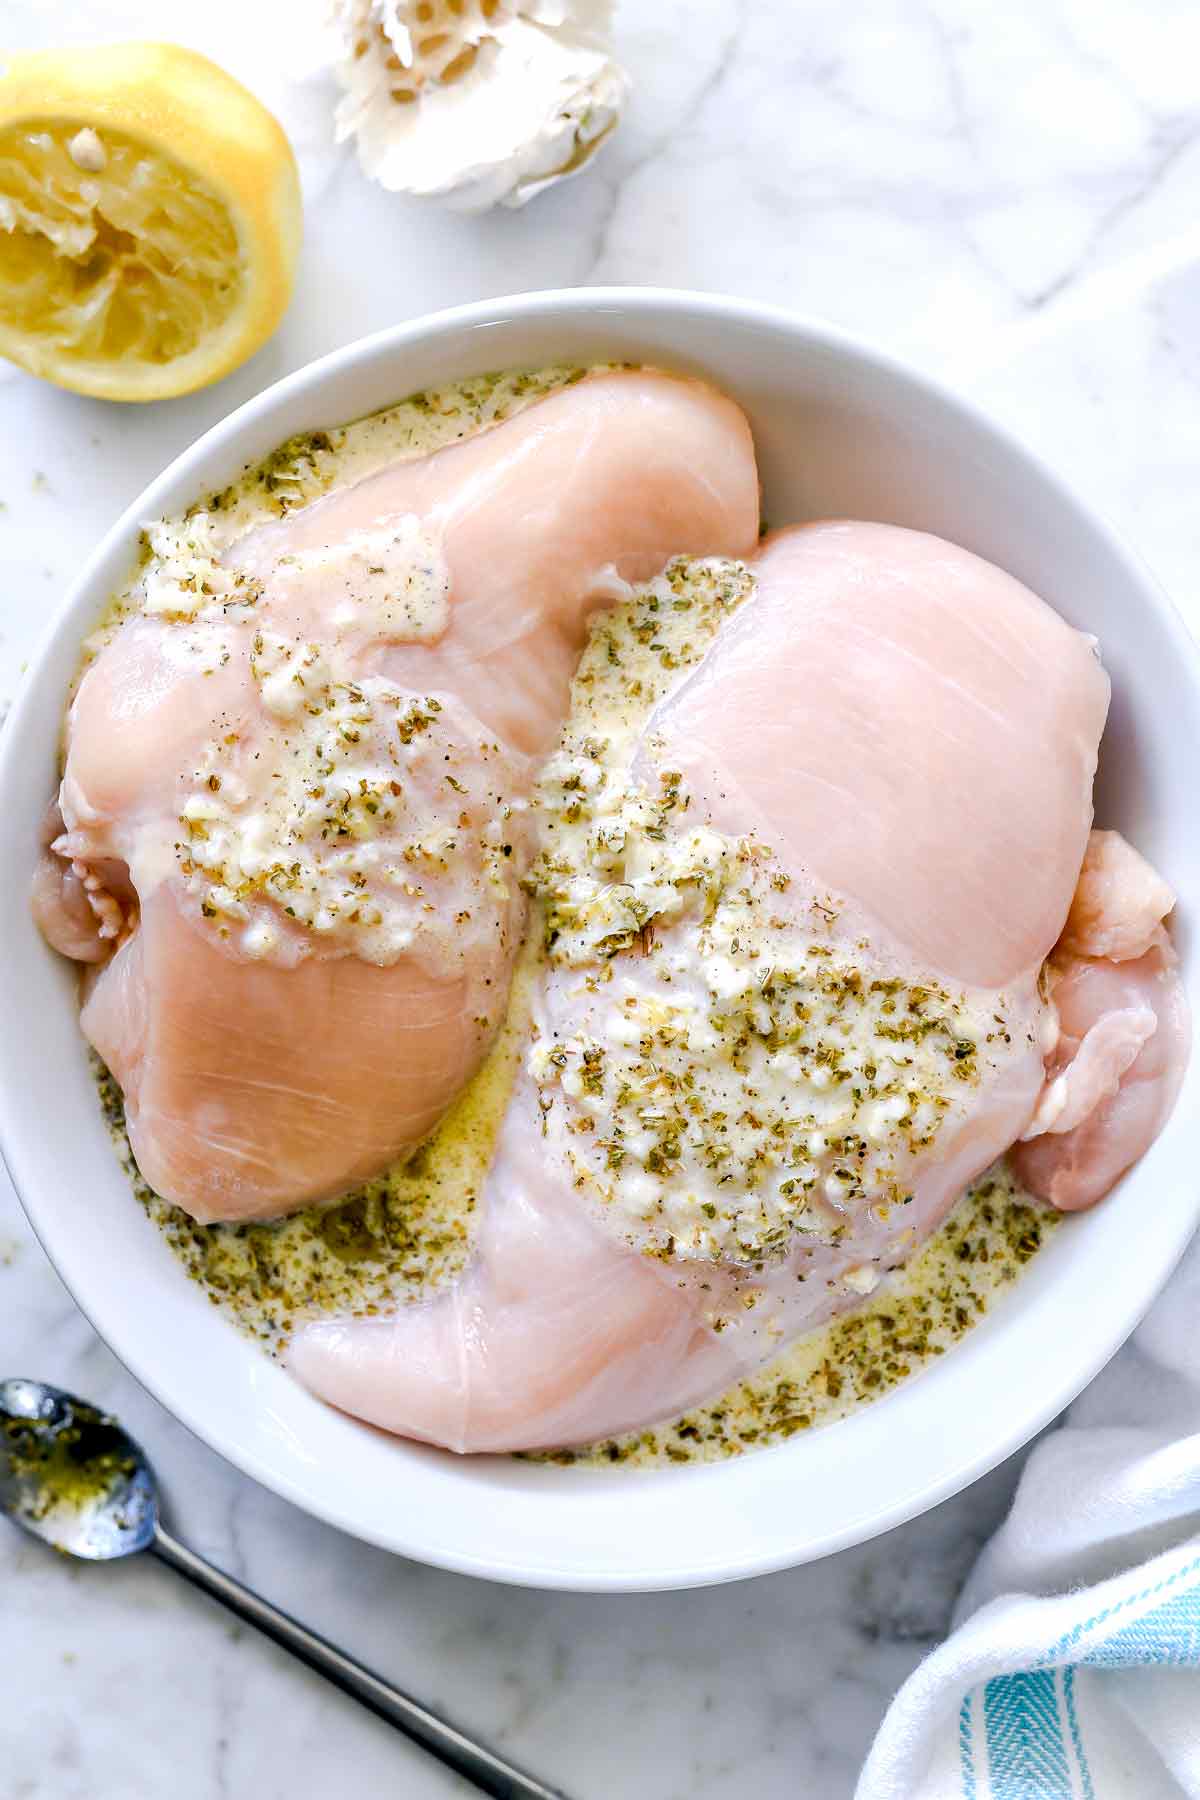 THE BEST Greek Chicken Marinade Recipe | foodiecrush.com